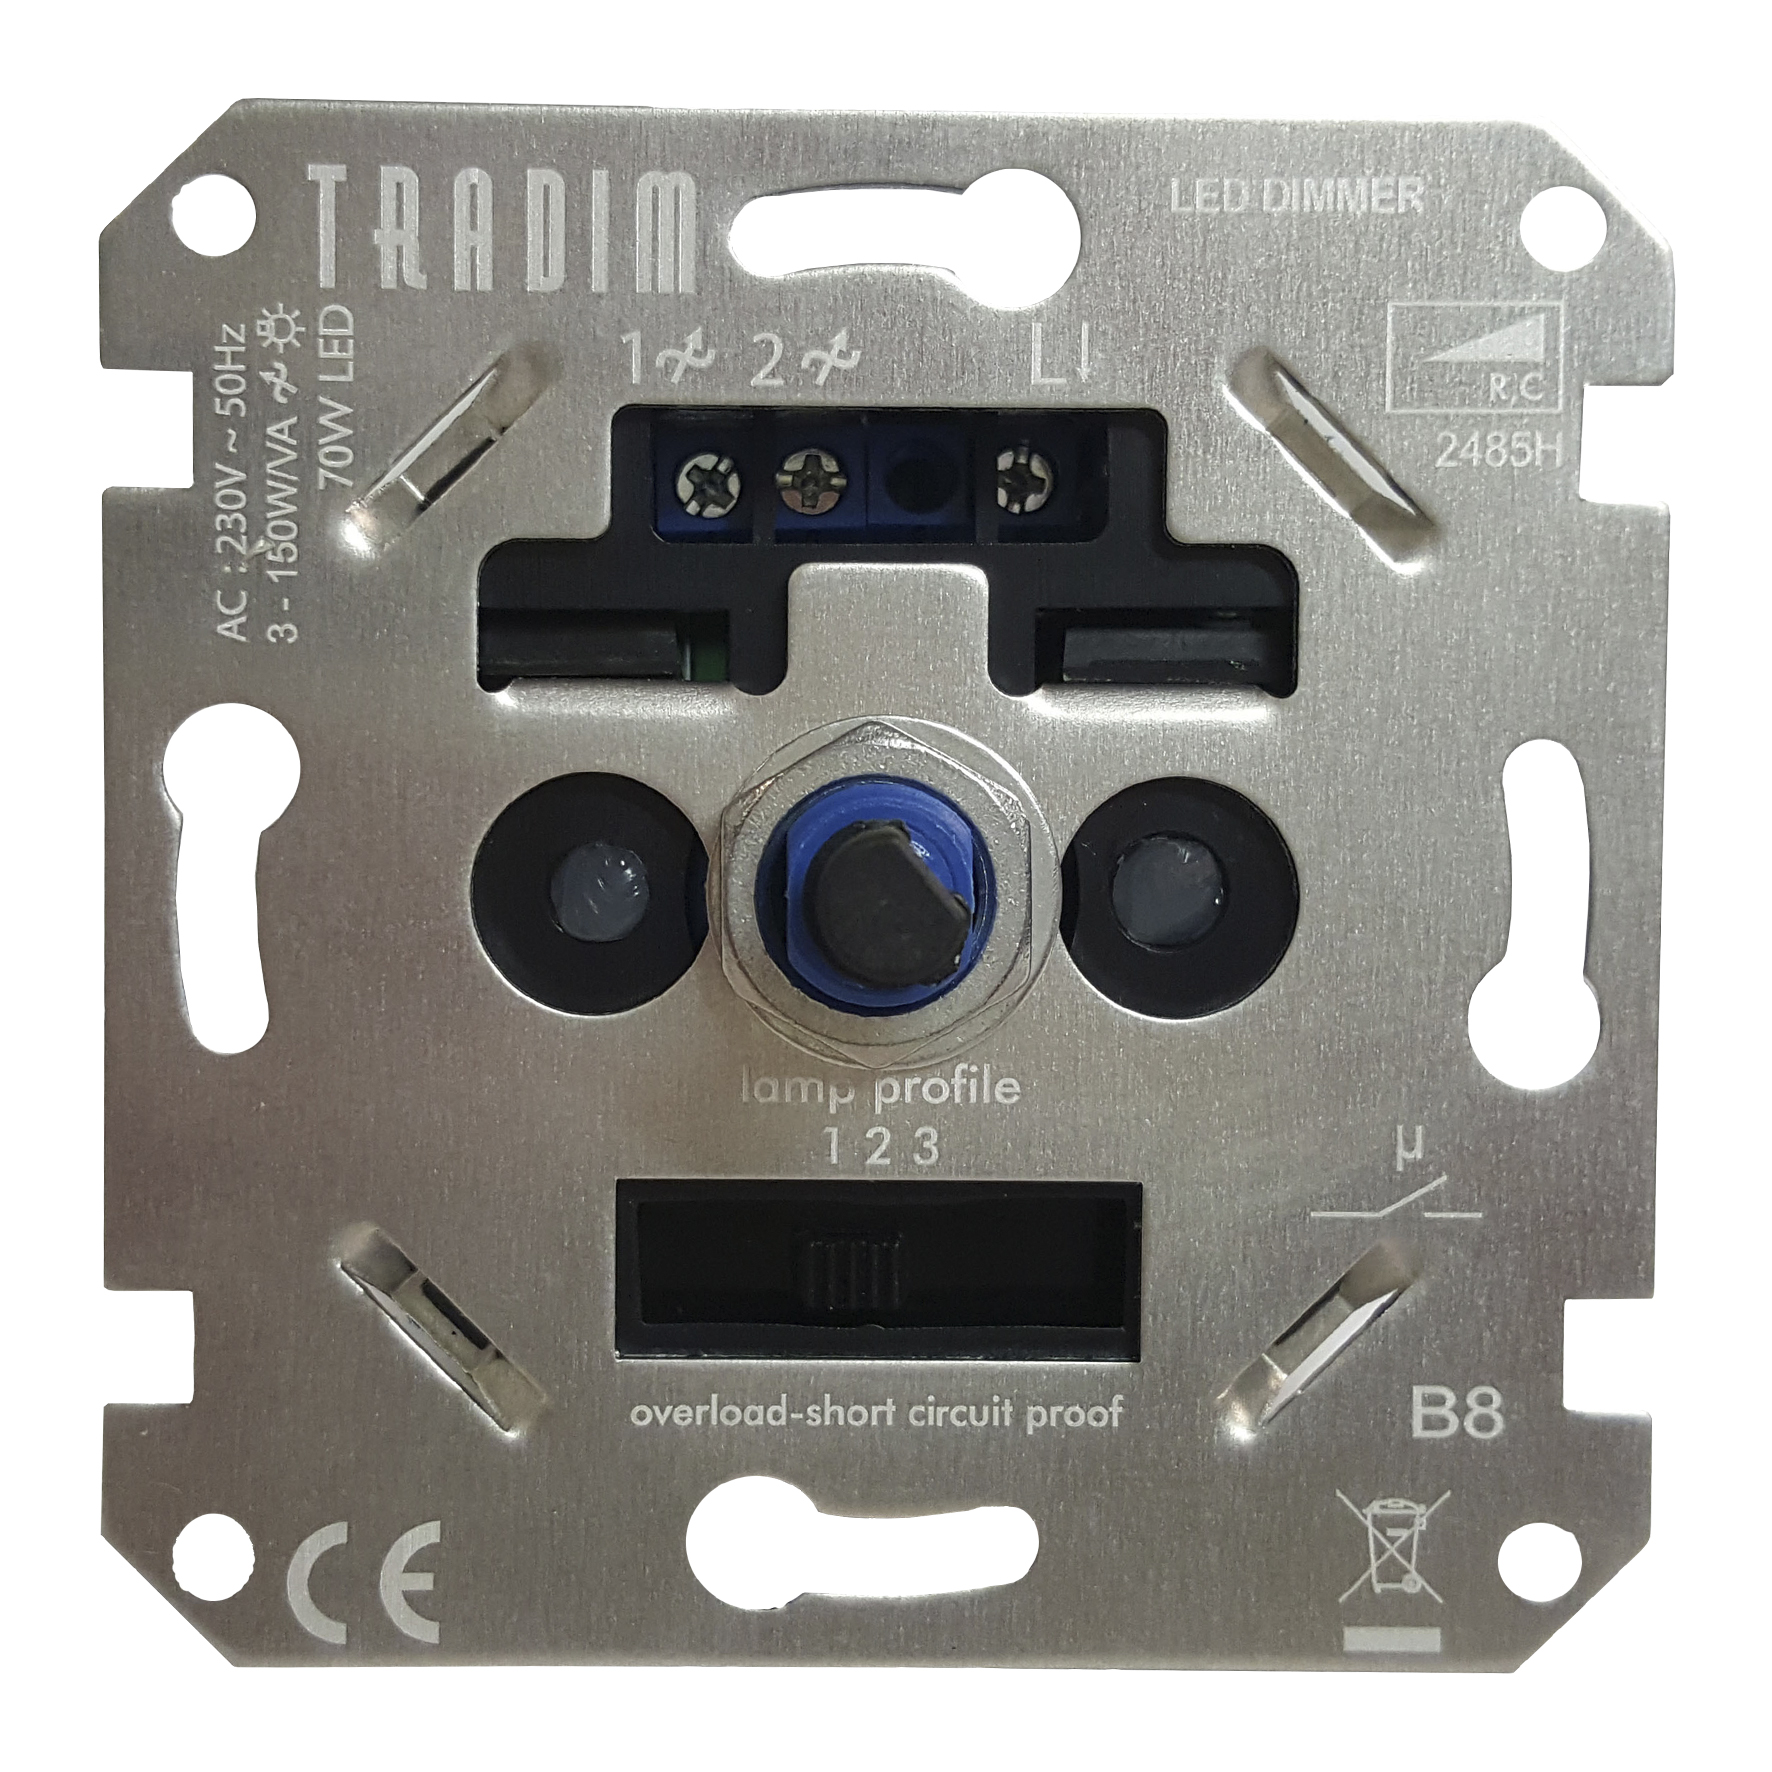 Tradim 2485H LED Tronic Dimmer 3-150W 3-profiles